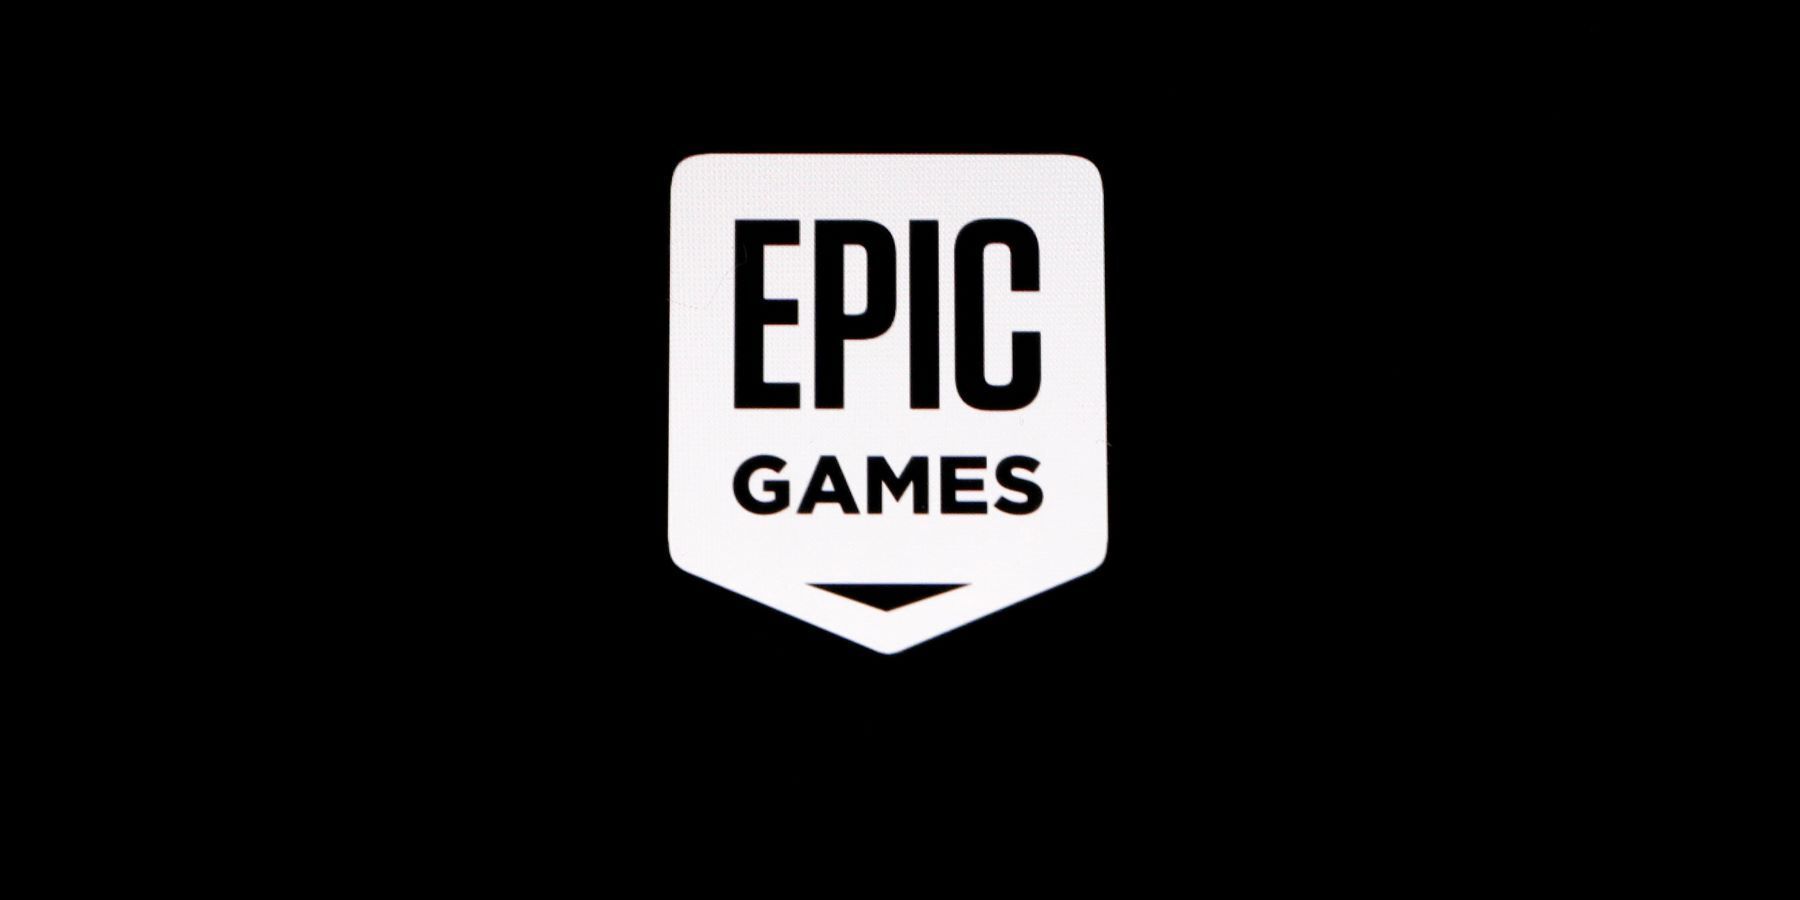 Hatoful Boyfriend Creator Says Epic Games Owes Her Royalties